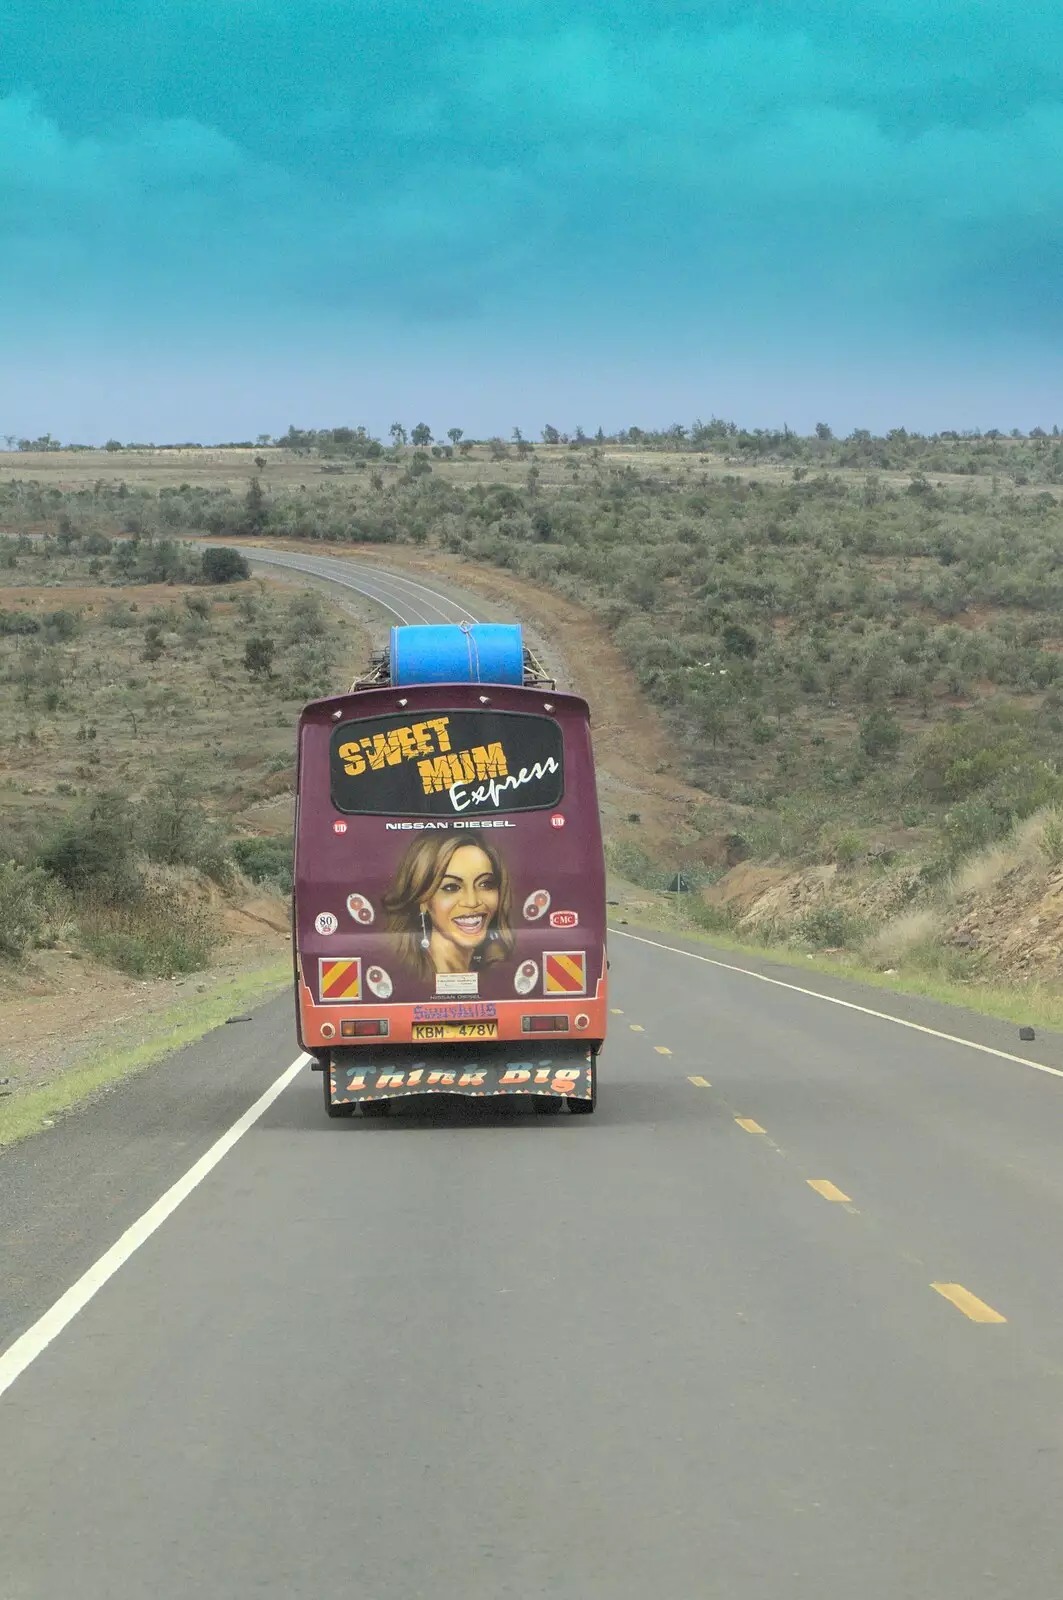 We follow a bus for a few miles, from Nairobi and the Road to Maasai Mara, Kenya, Africa - 1st November 2010